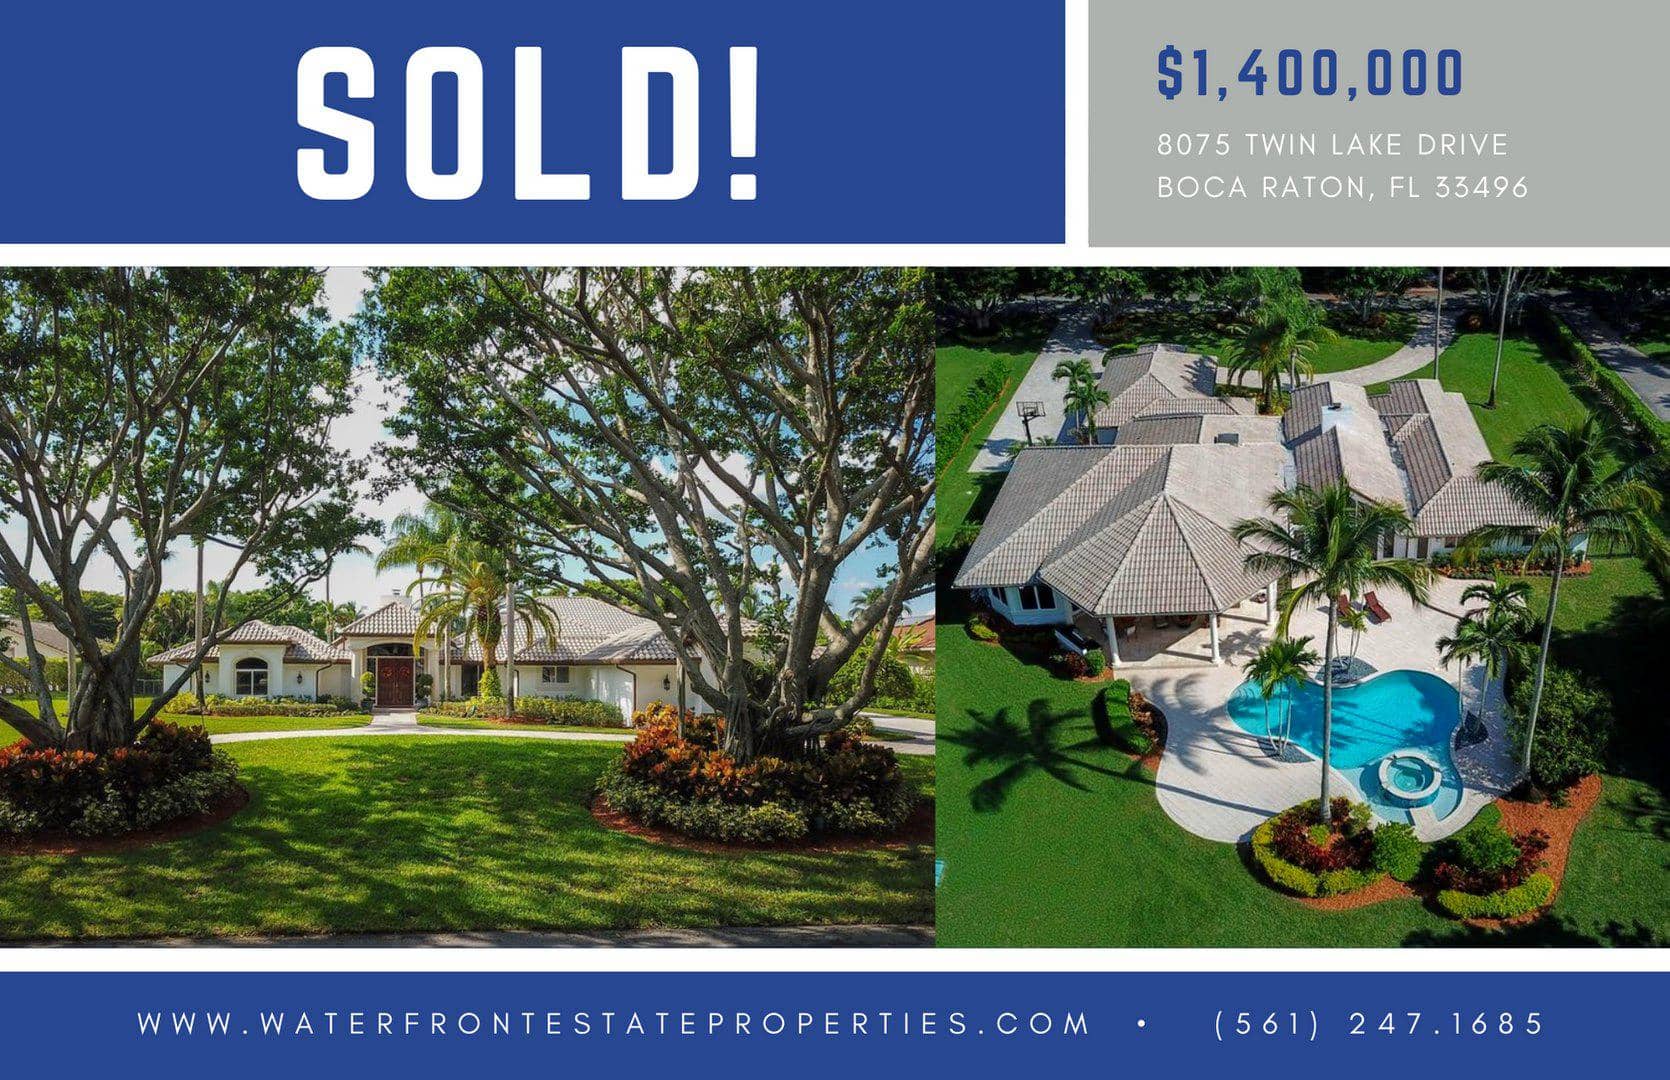 Waterfront & Estate Properties - Boca Raton, FL, US, homes for sale